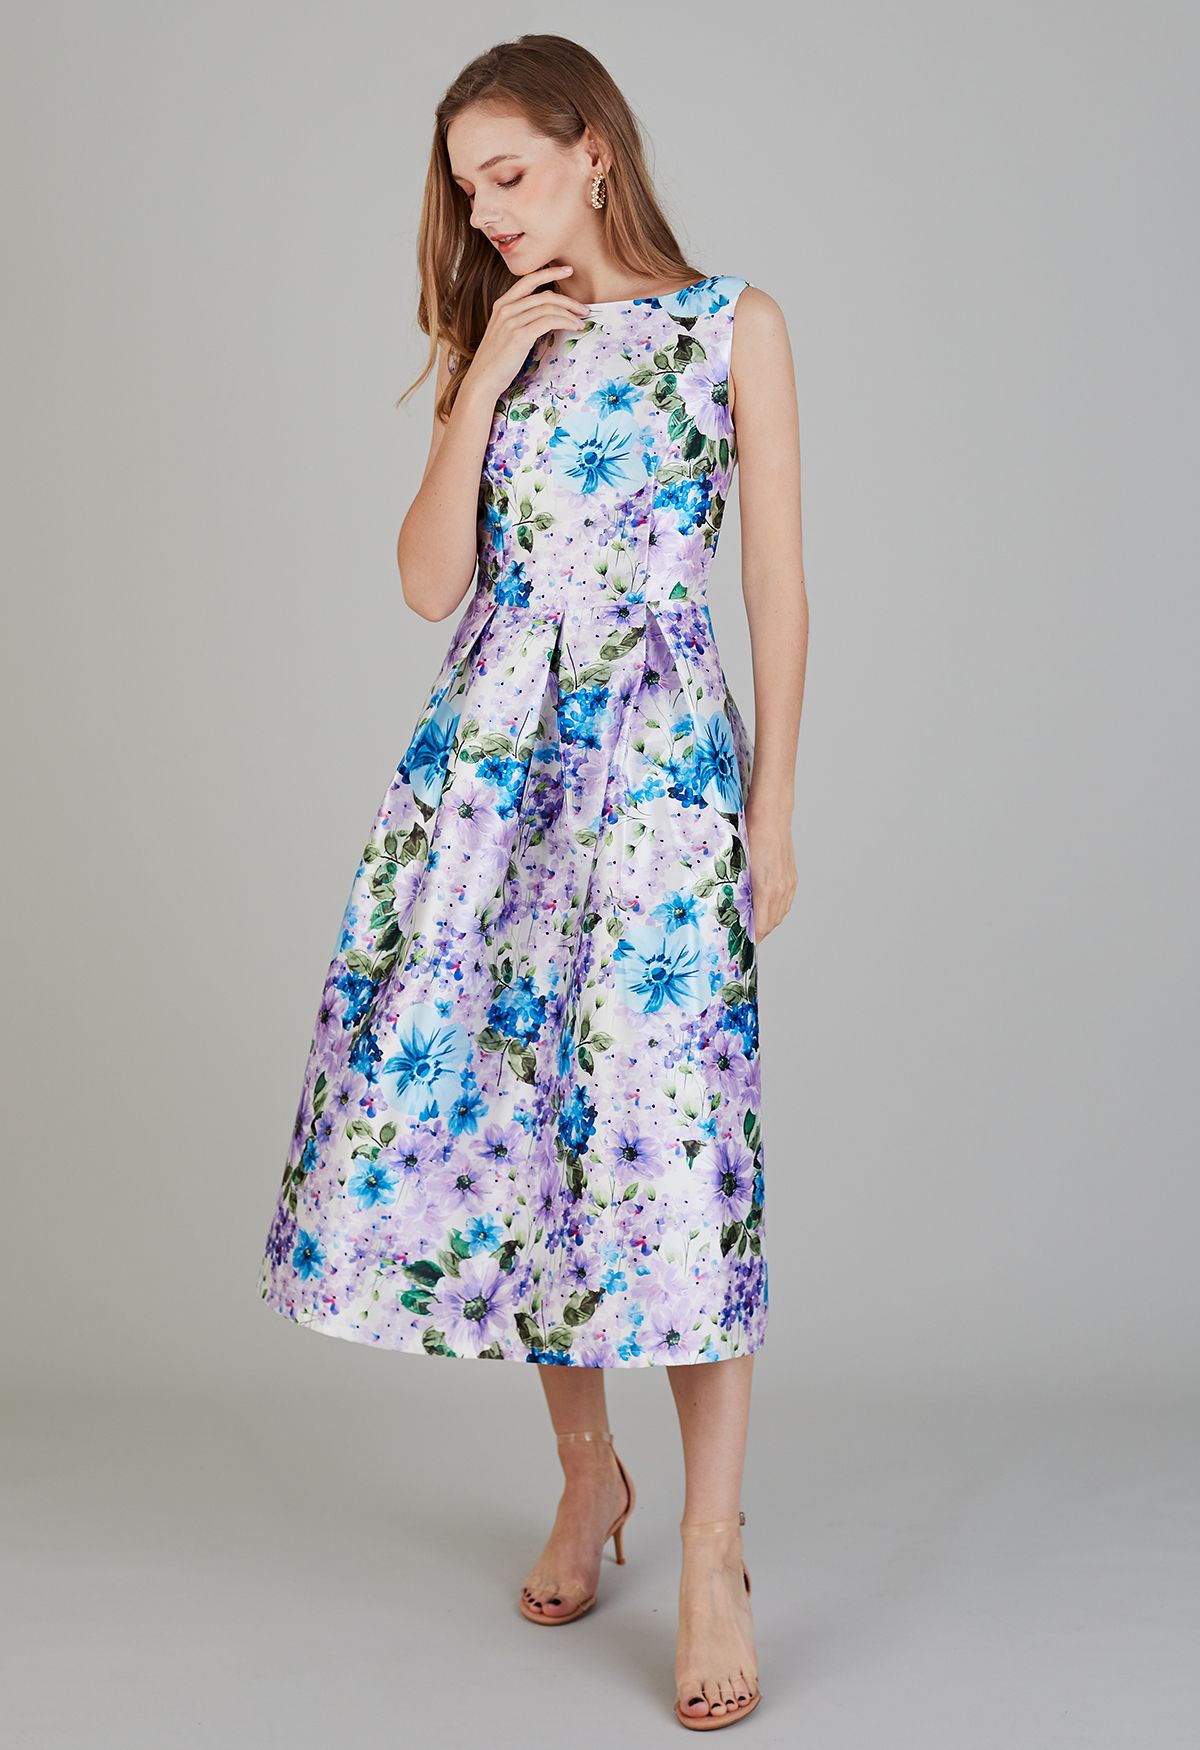 Flowery Scenery Sleeveless Midi Dress - Retro, Indie and Unique Fashion